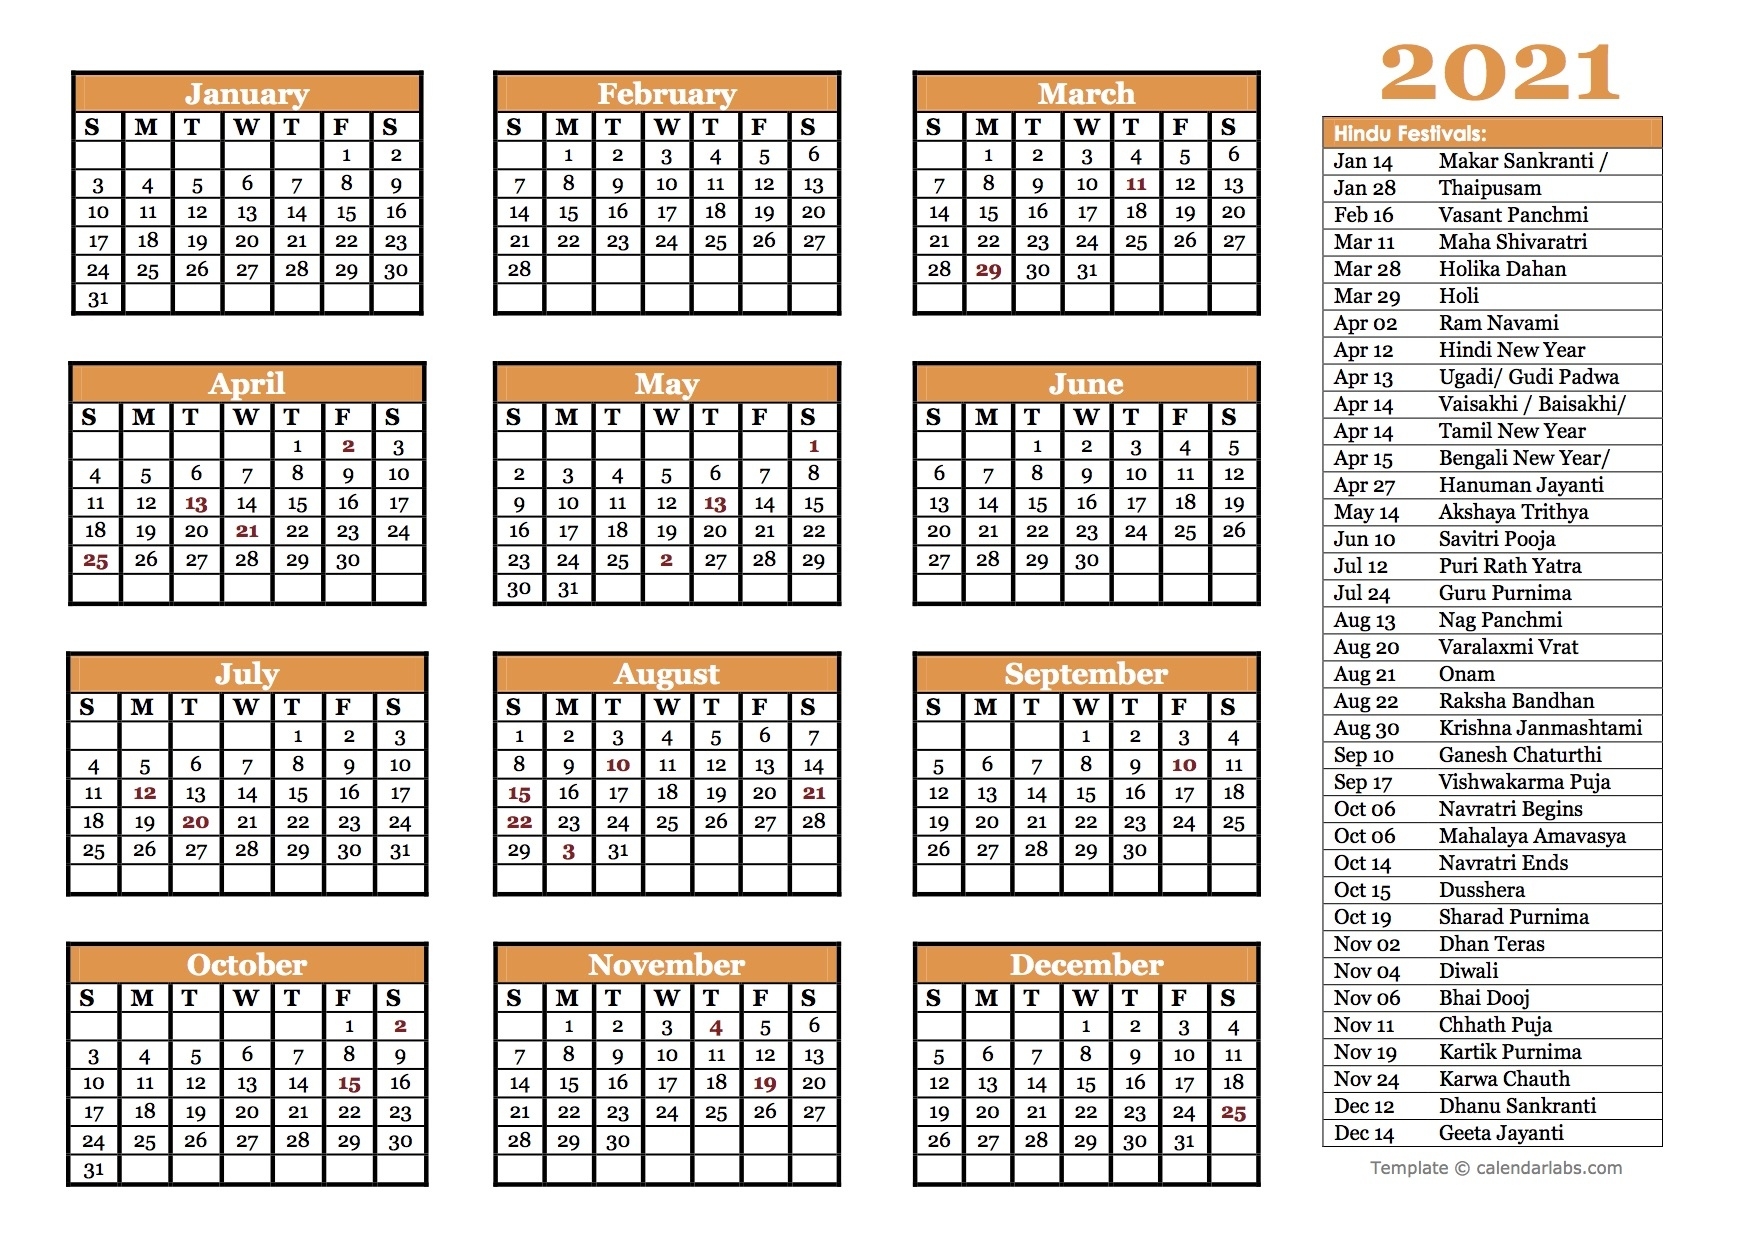 2021 Hindu Festivals Calendar Template - Free Printable Templates September 2021 Hindu Calendar